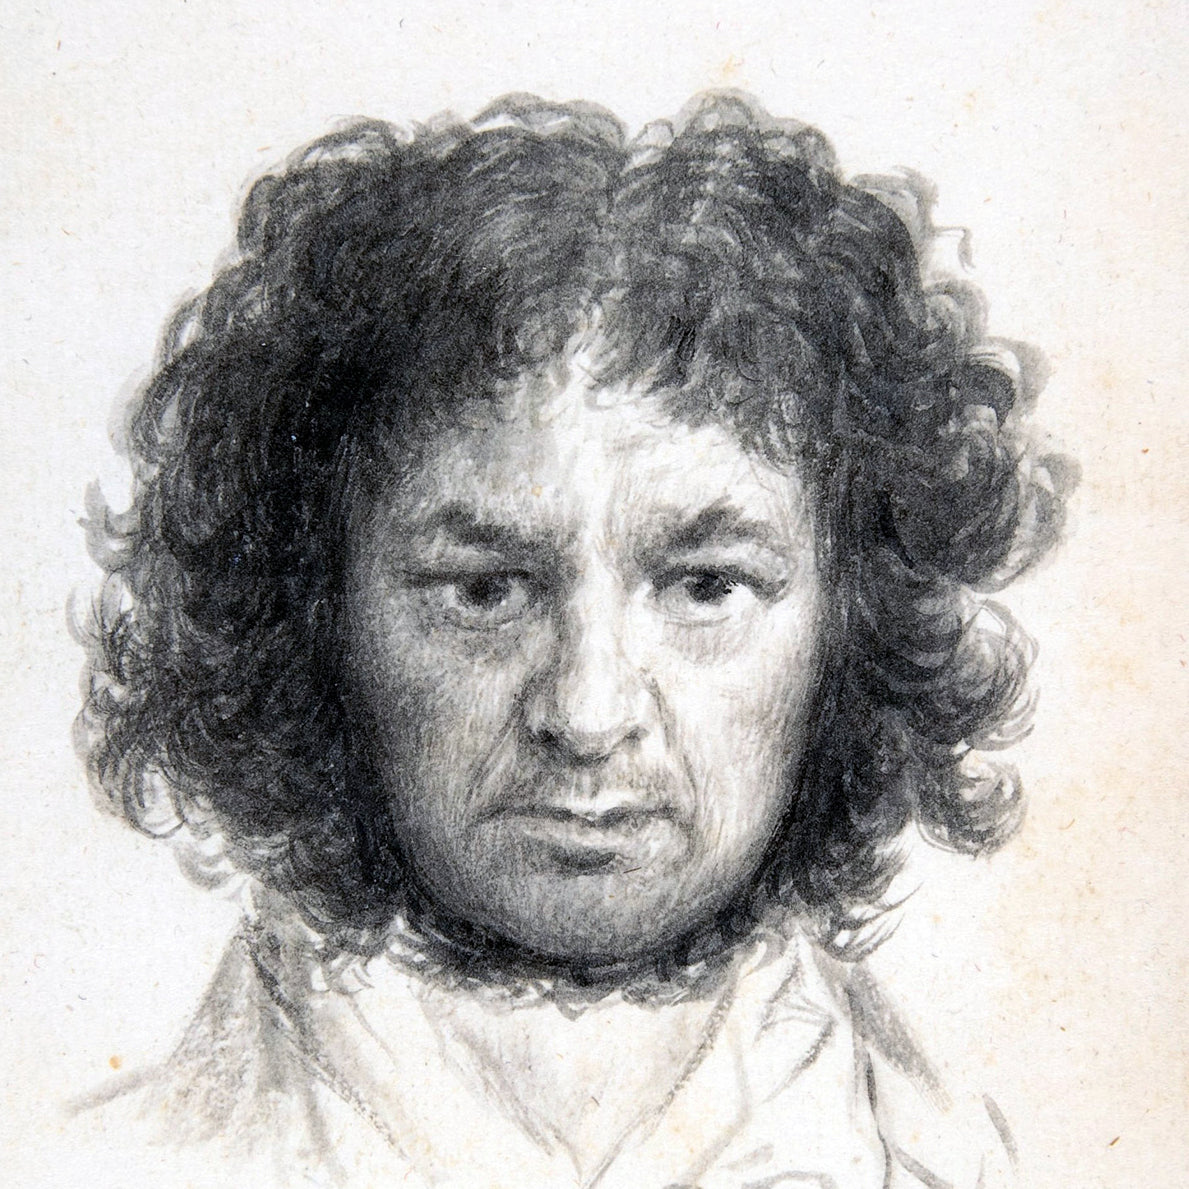 Portrrait of Francisco Goya